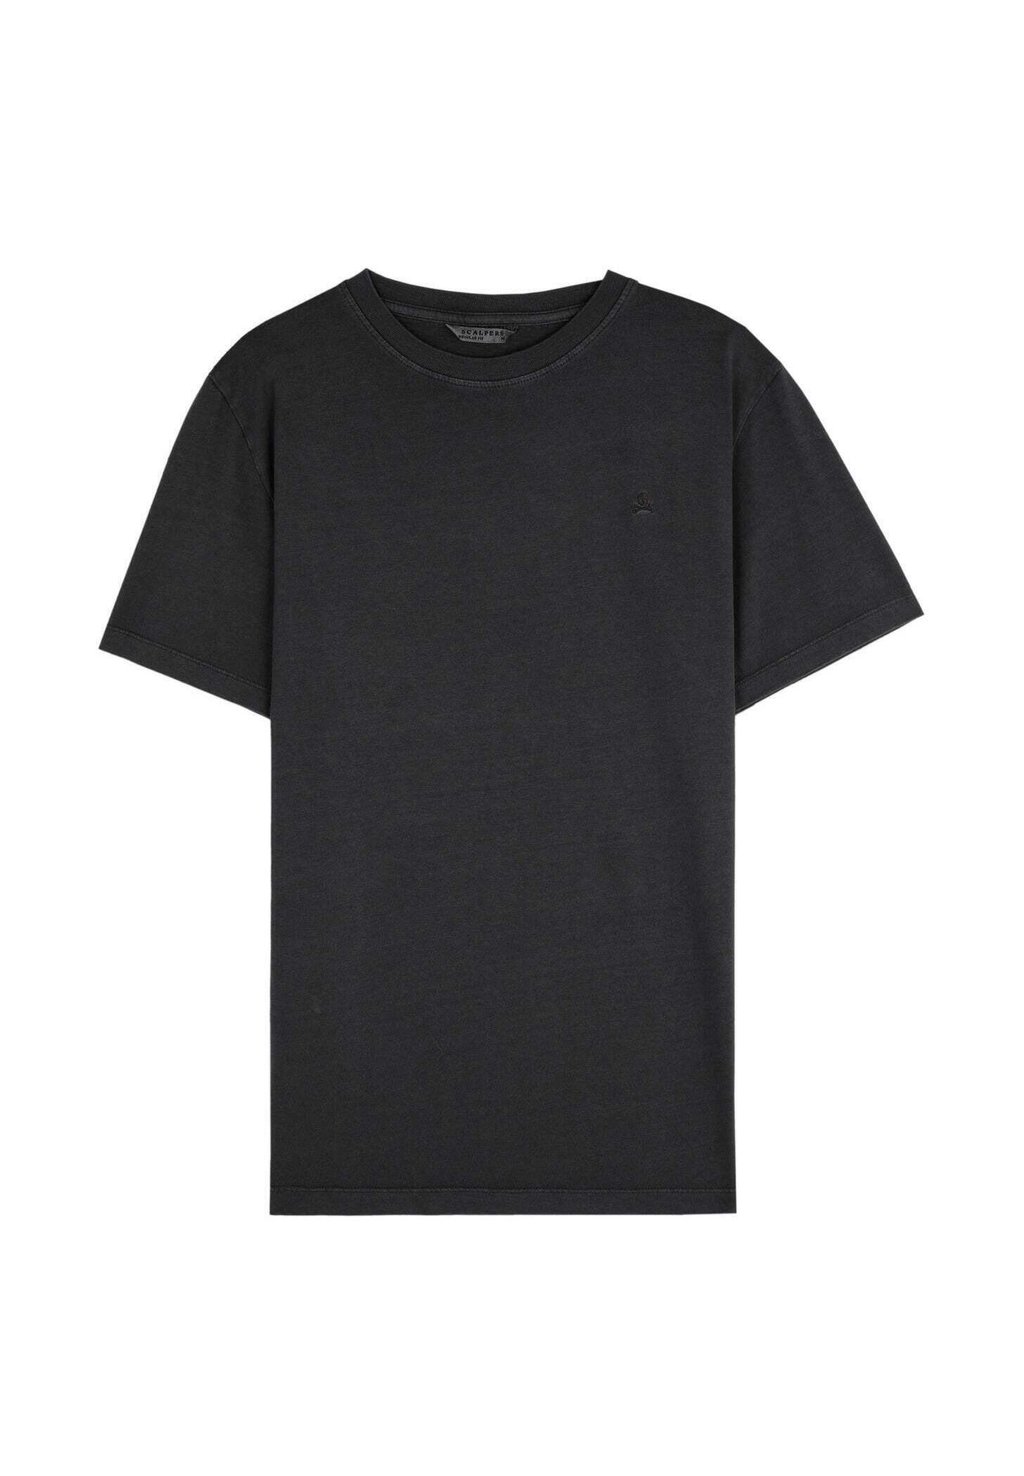 Базовая футболка SKULL Scalpers, темно-серый толстовка tack skull scalpers лиловый